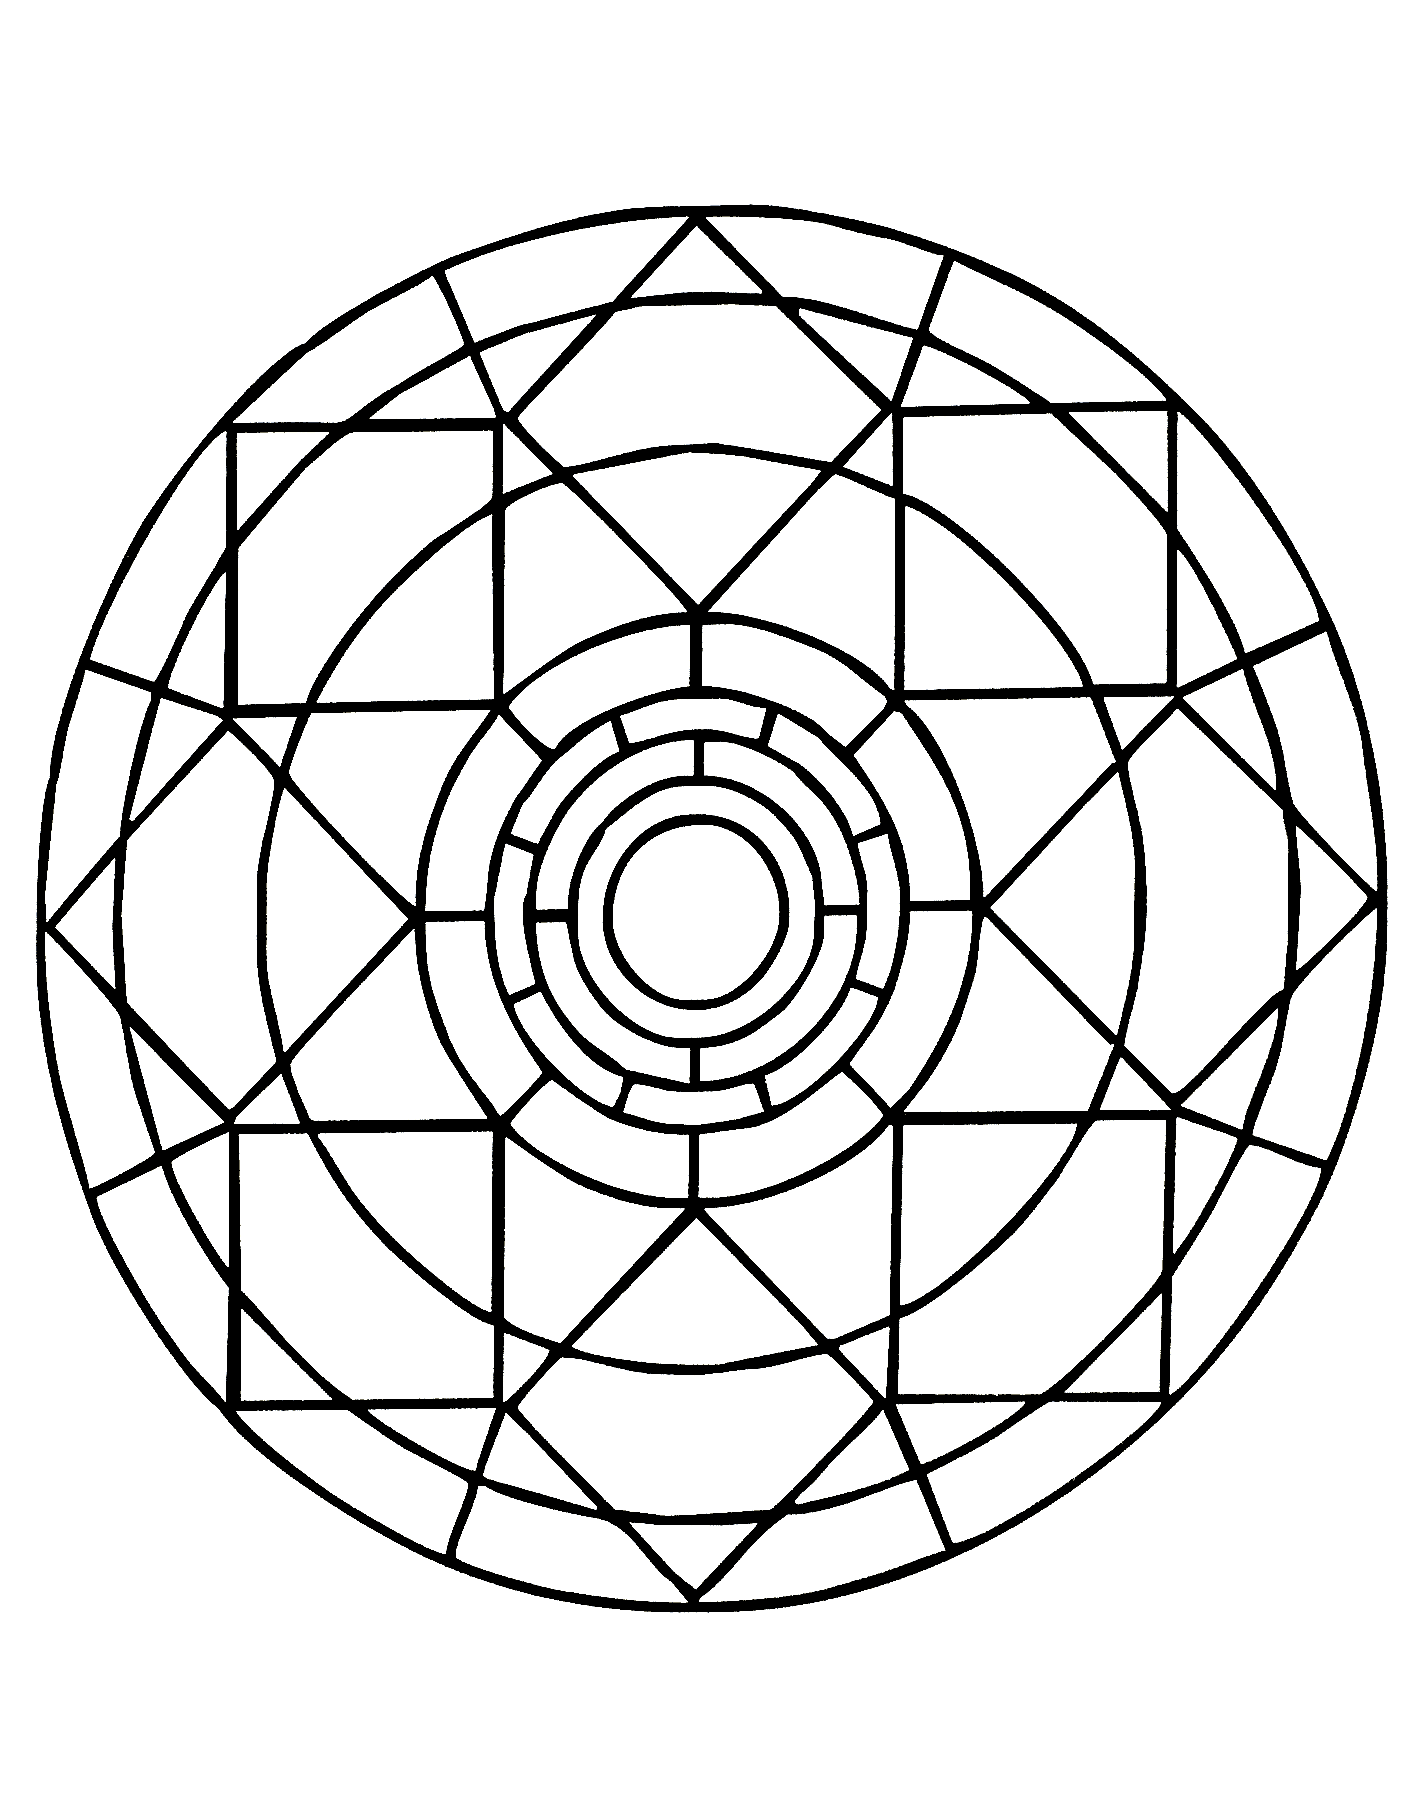 Mandalas geometric to print - 5